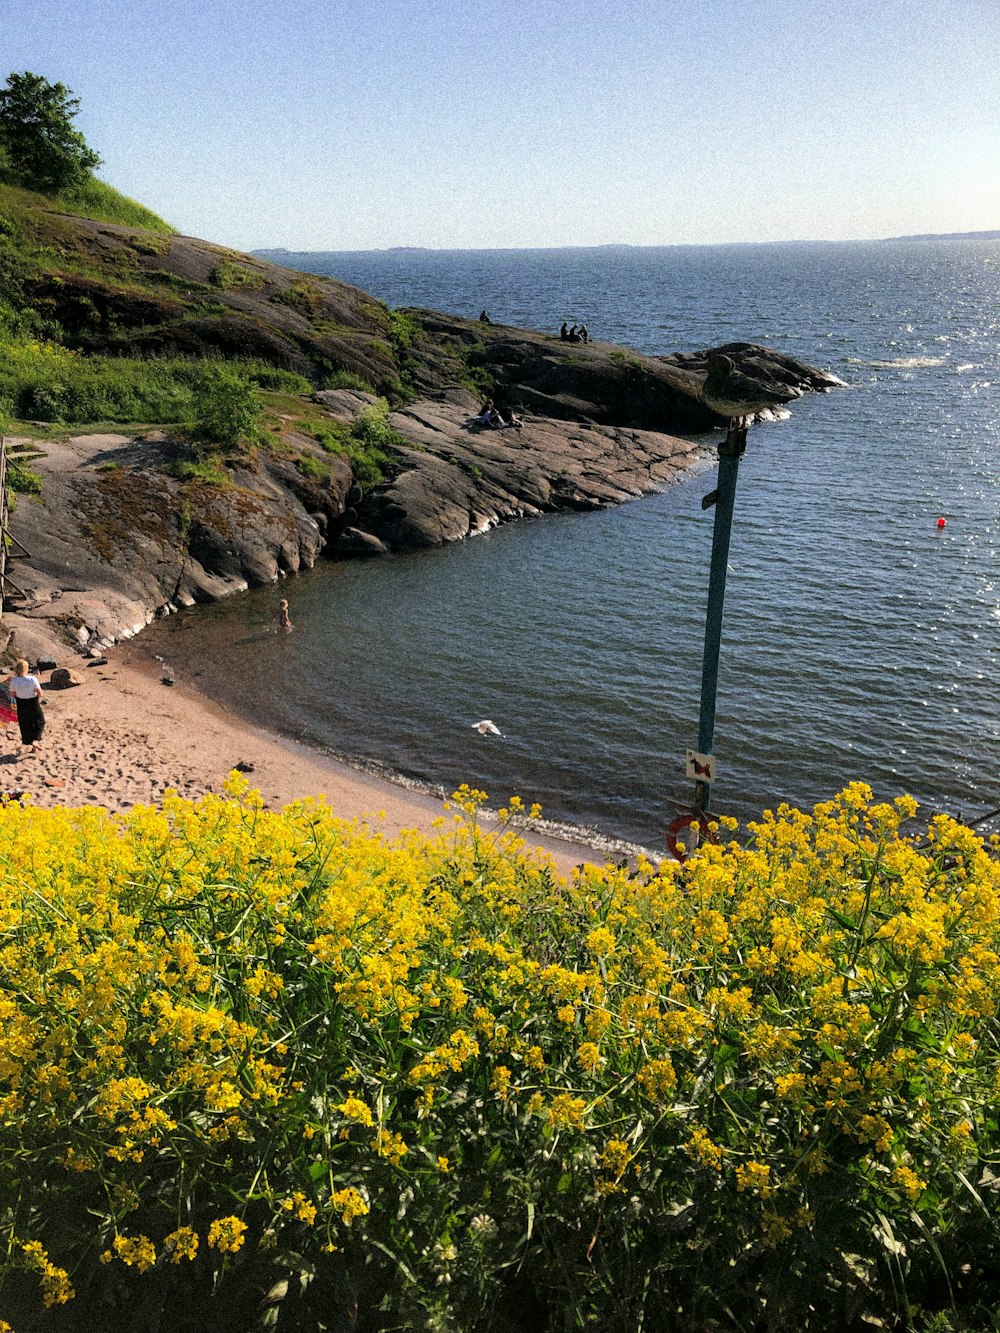 yellow flower field near beach during daytime